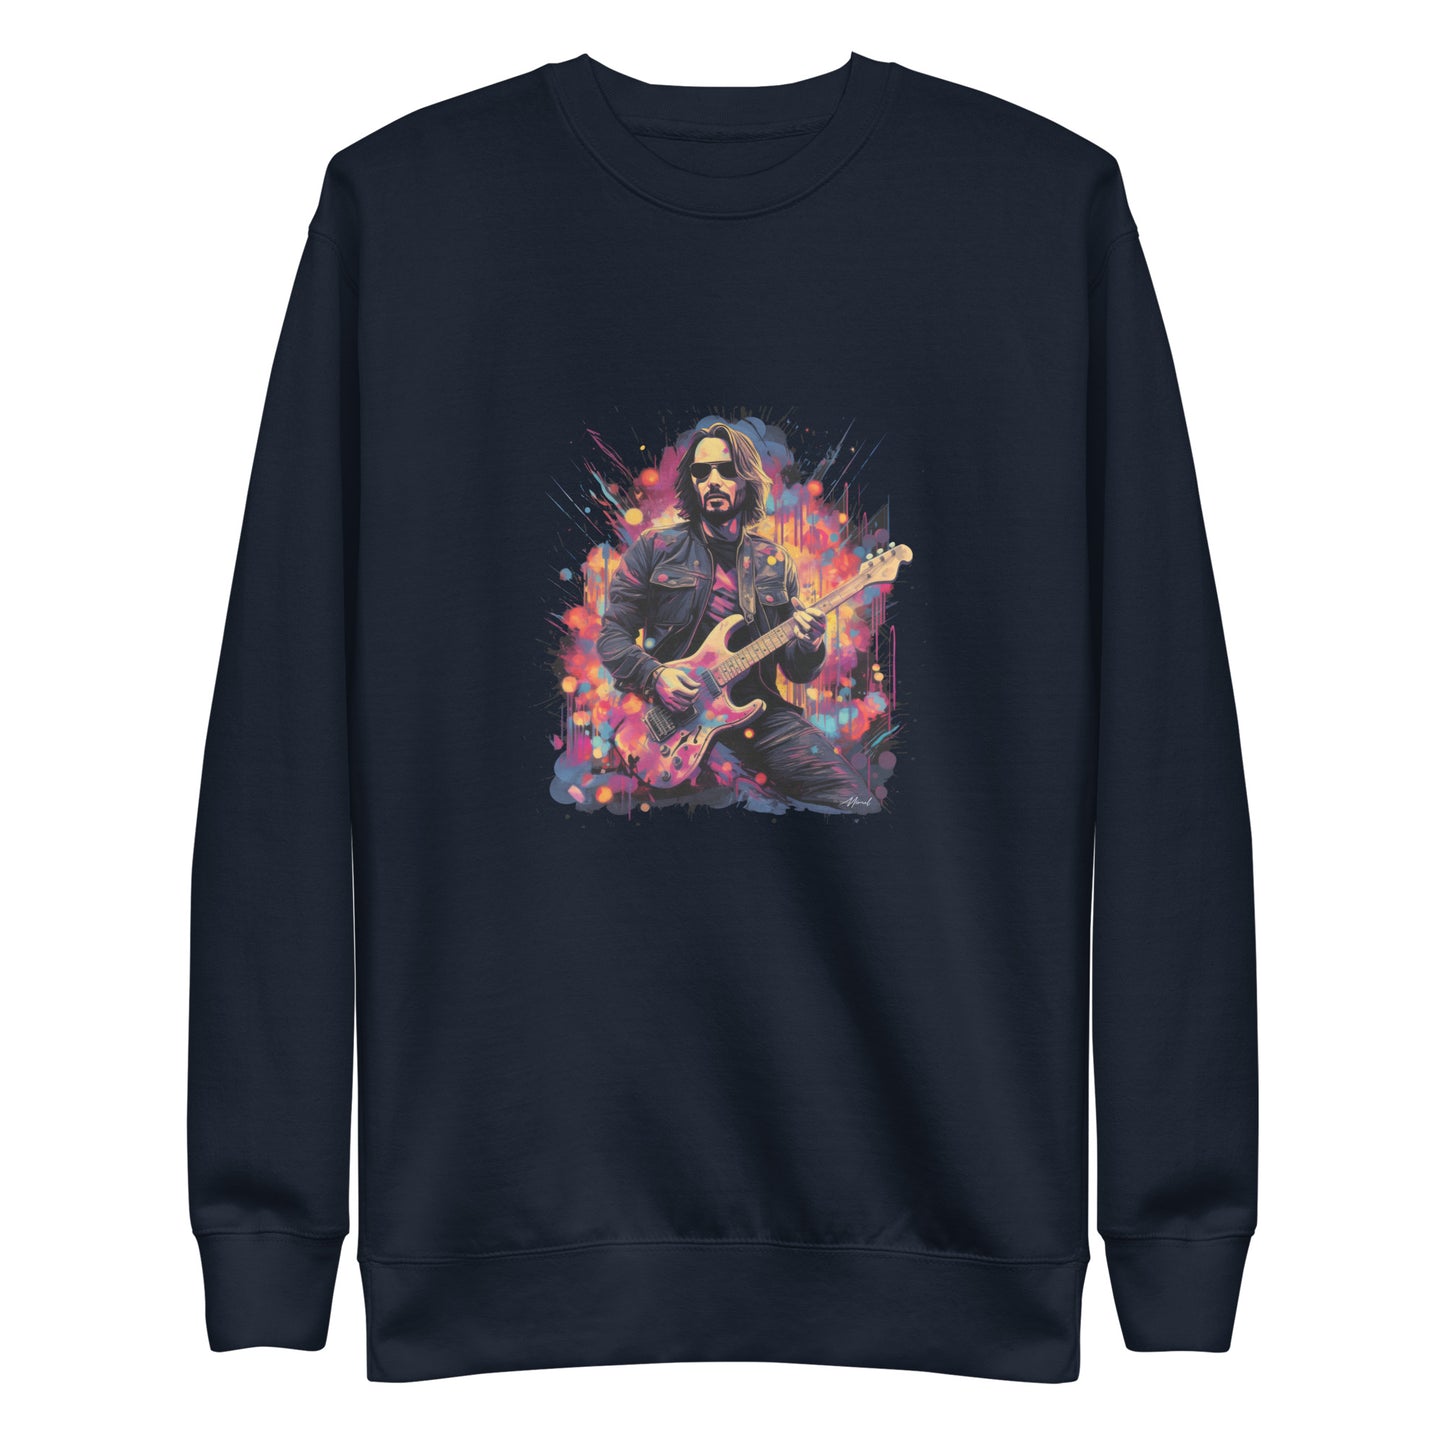 Johnny Silverhand: Guitar Virtuoso of the Cyberpunk Sweater (Unisex)